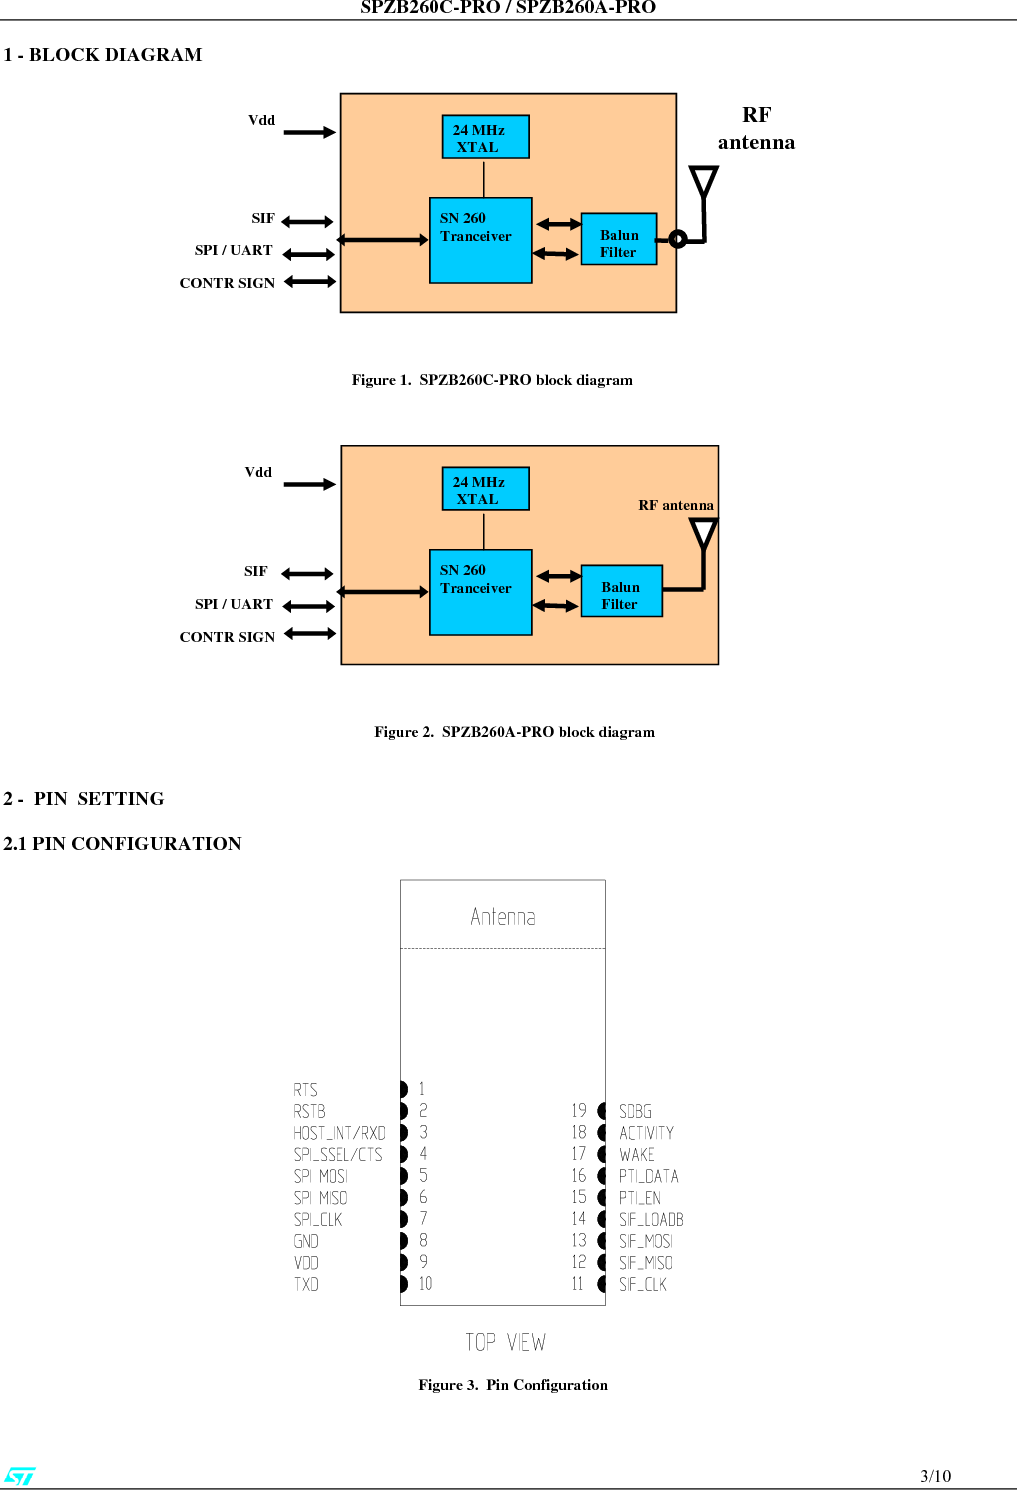 SPZB260C-PRO / SPZB260A-PRO                                       3/10  1 - BLOCK DIAGRAM                                 2 -  PIN  SETTING  2.1 PIN CONFIGURATION                                                                                                            Figure 3.  Pin Configuration    Figure 1.  SPZB260C-PRO block diagram  24 MHzXTALSN 260  Tranceiver  Balun Filter                  Vdd                       SIF     SPI / UART CONTR SIGN RF antenna  24 MHzXTALSN 260  Tranceiver  Balun Filter                 Vdd                     SIF     SPI / UART CONTR SIGN  RF antenna Figure 2.  SPZB260A-PRO block diagram 